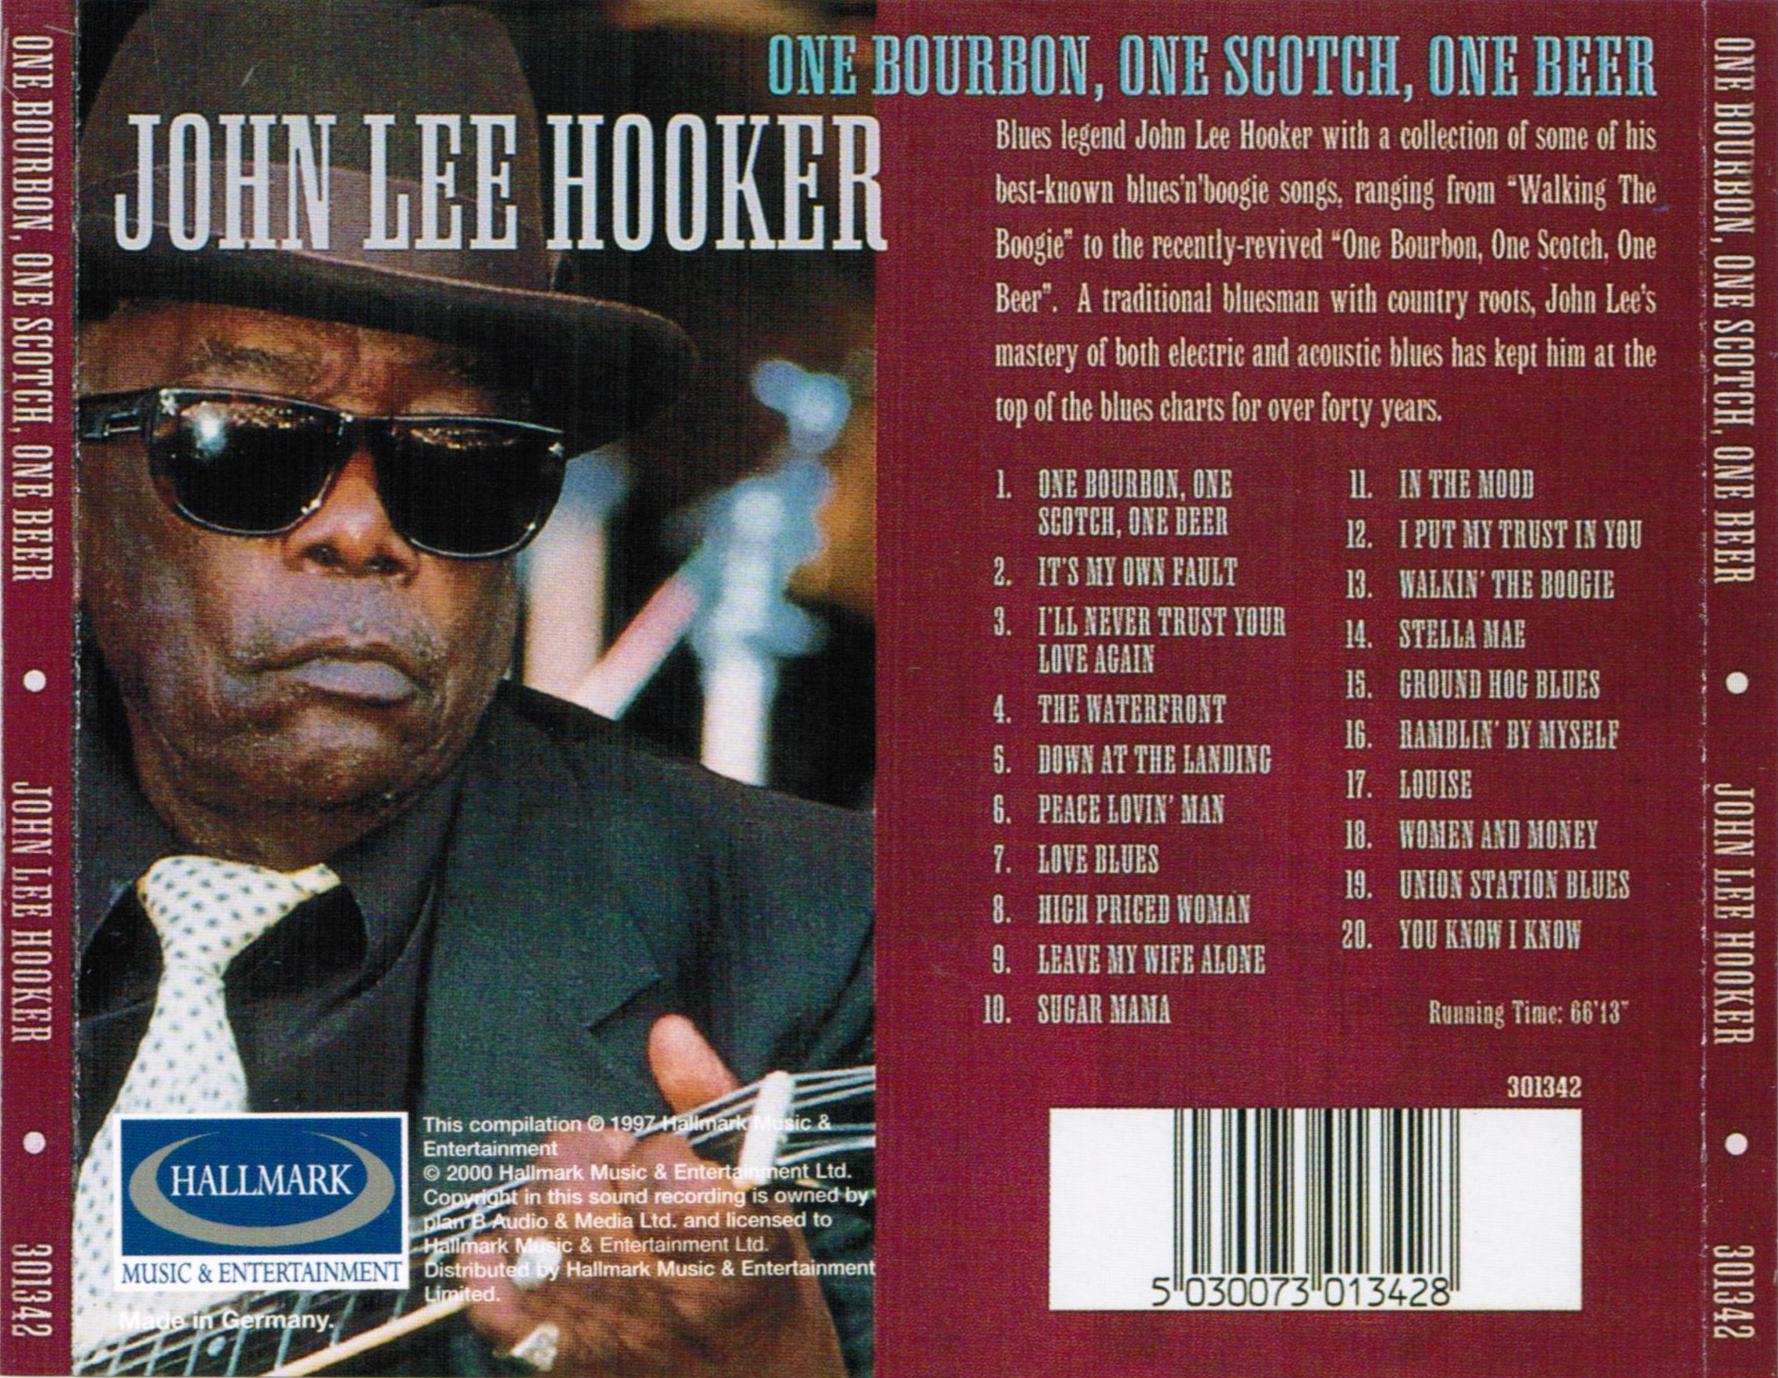 Release “One Bourbon, One Scotch, One Beer” by John Lee Hooker - Cover Art  - MusicBrainz